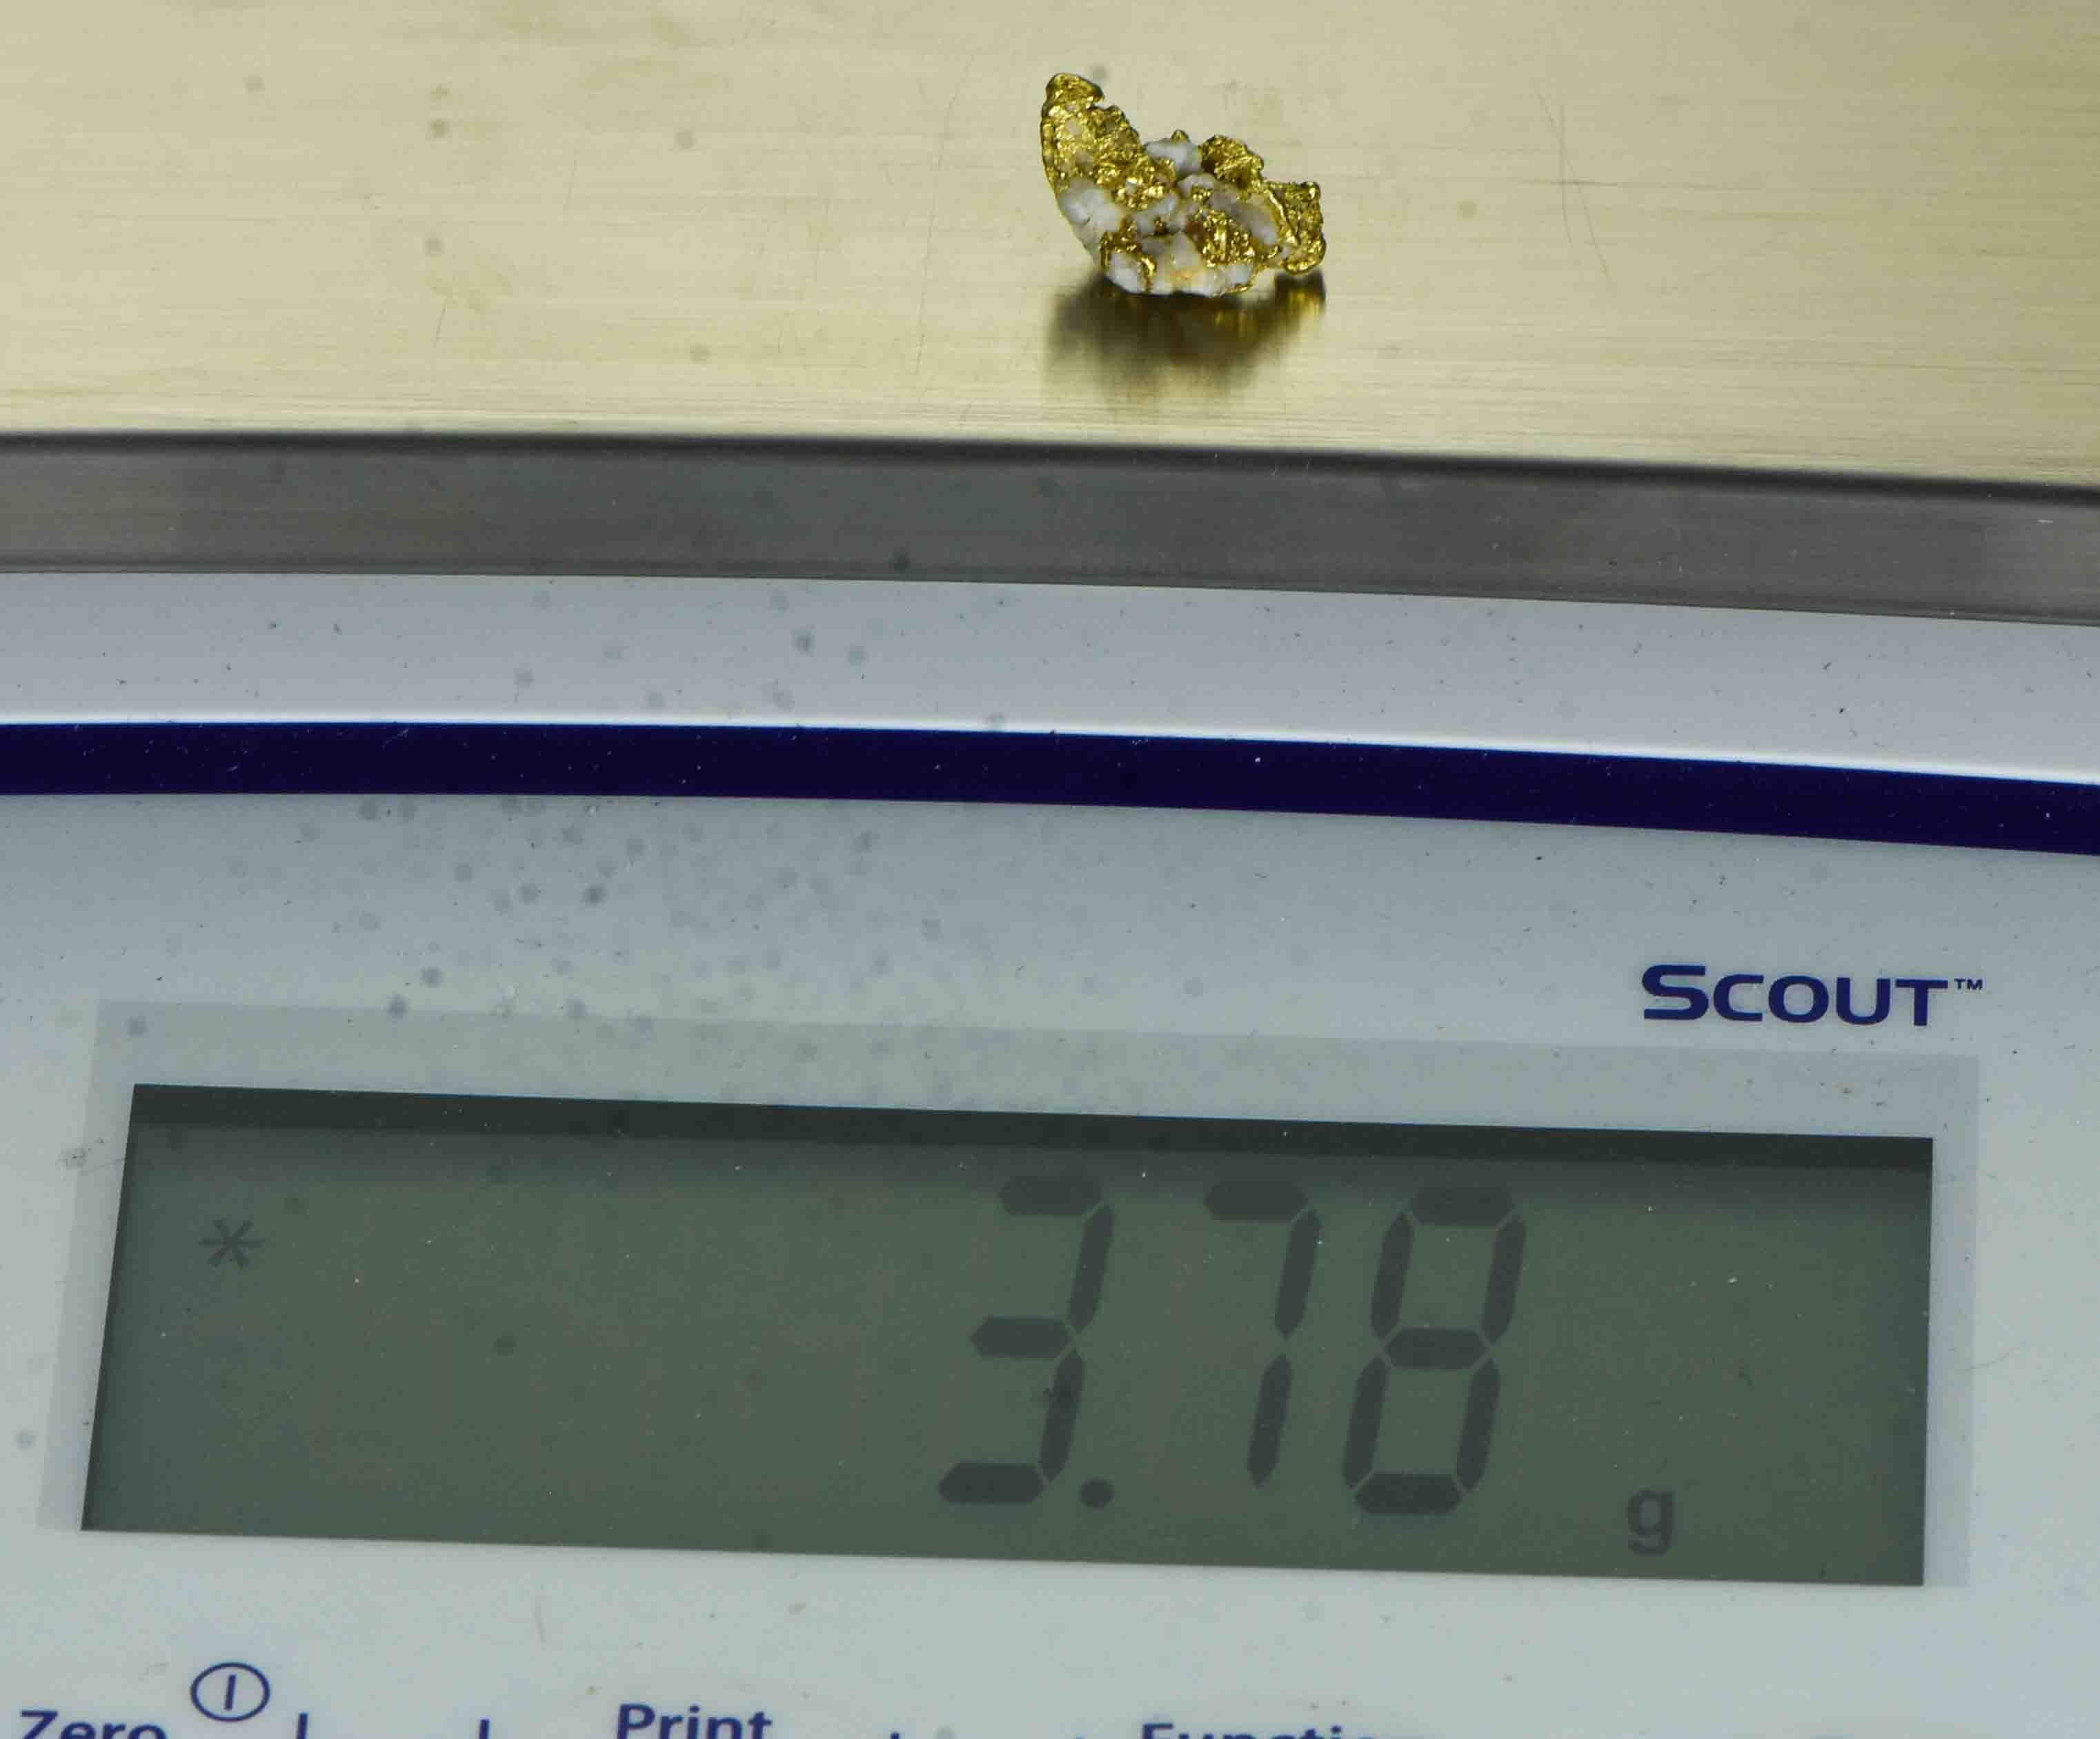 QN-125 "Alaskan BC Gold Nuggets with Quartz" Genuine 3.78 Grams